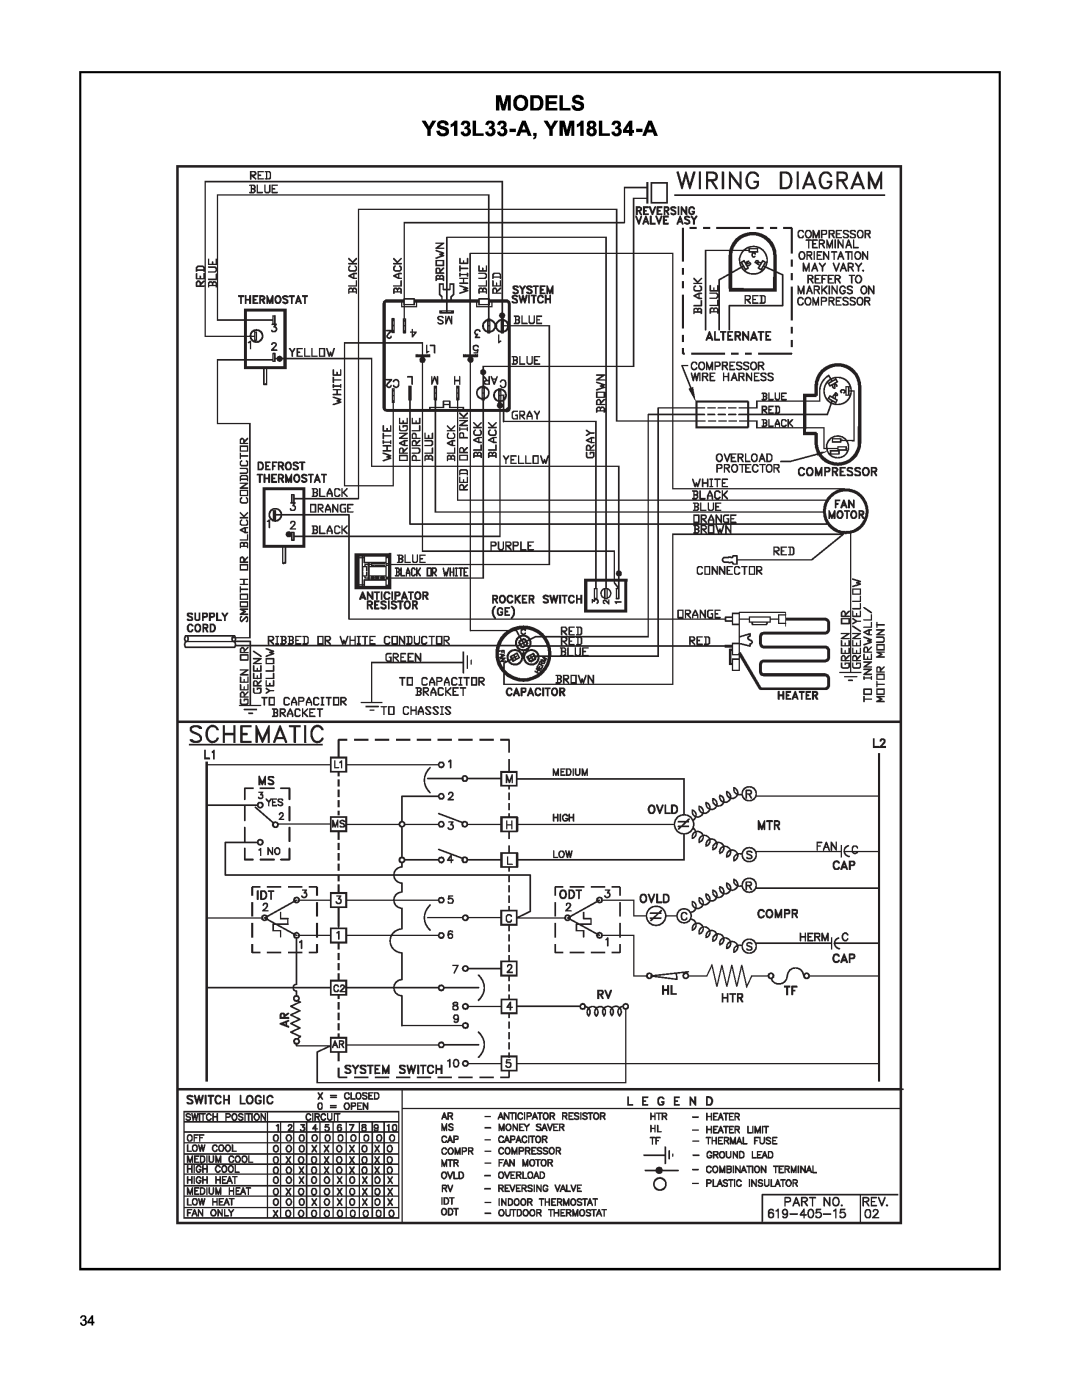 Friedrich RAC-SVC-06 service manual YS13L33-A, YM18L34-A, Models 